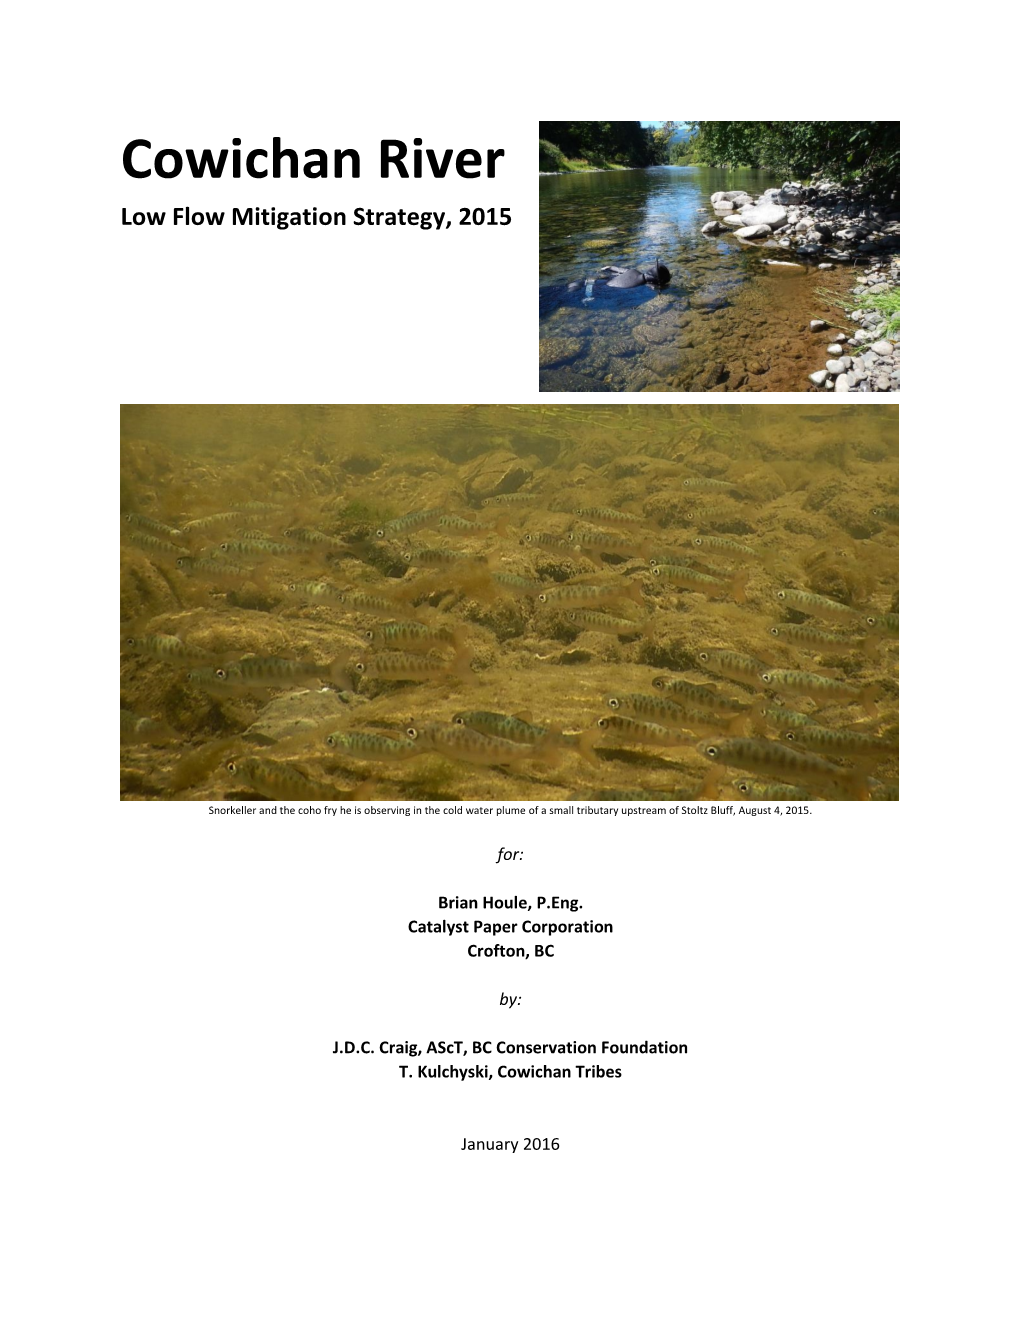 Cowichan River Low Flow Mitigation Strategy, 2015